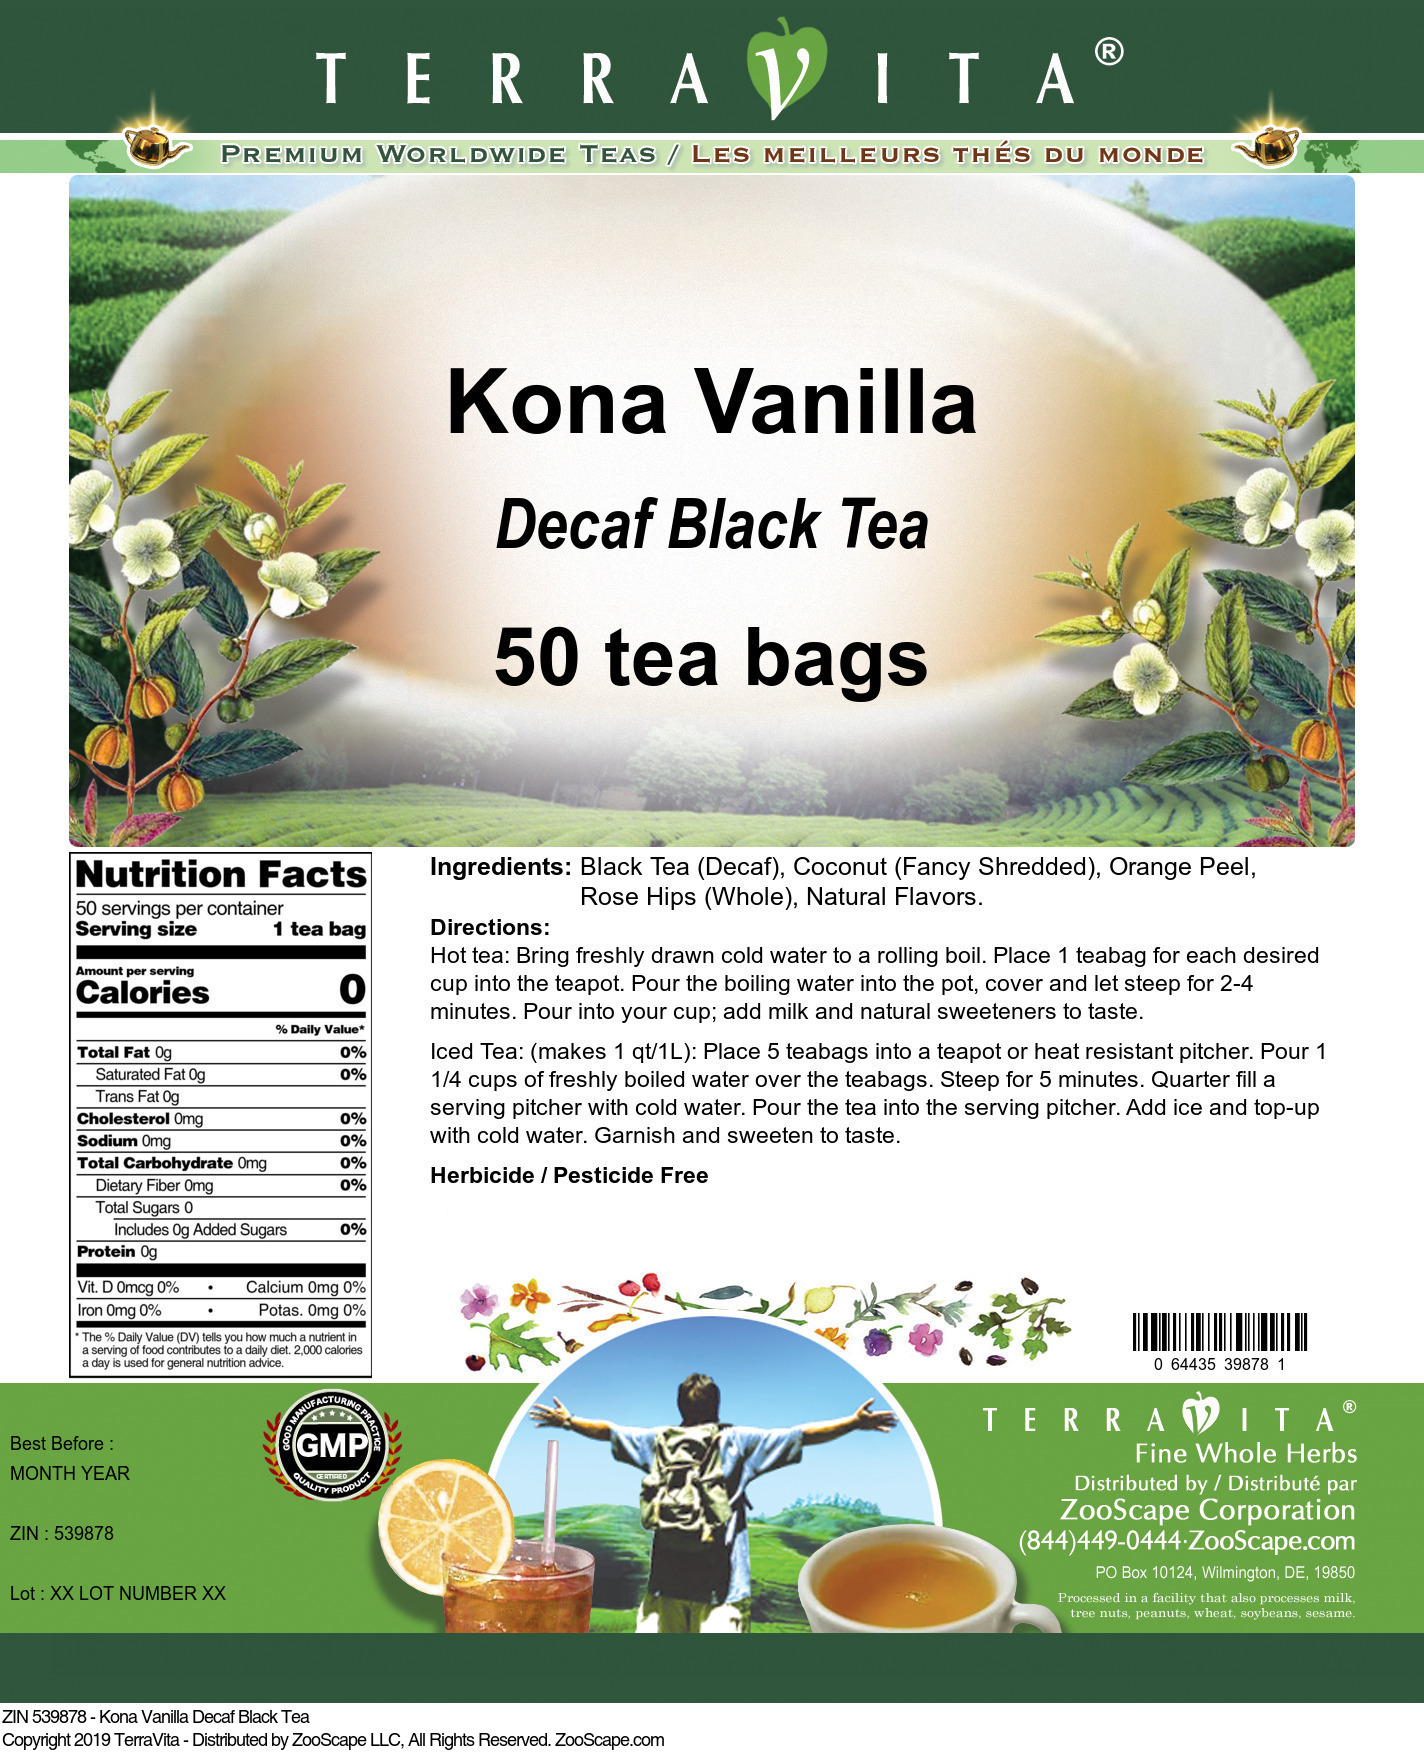 Kona Vanilla Decaf Black Tea - Label